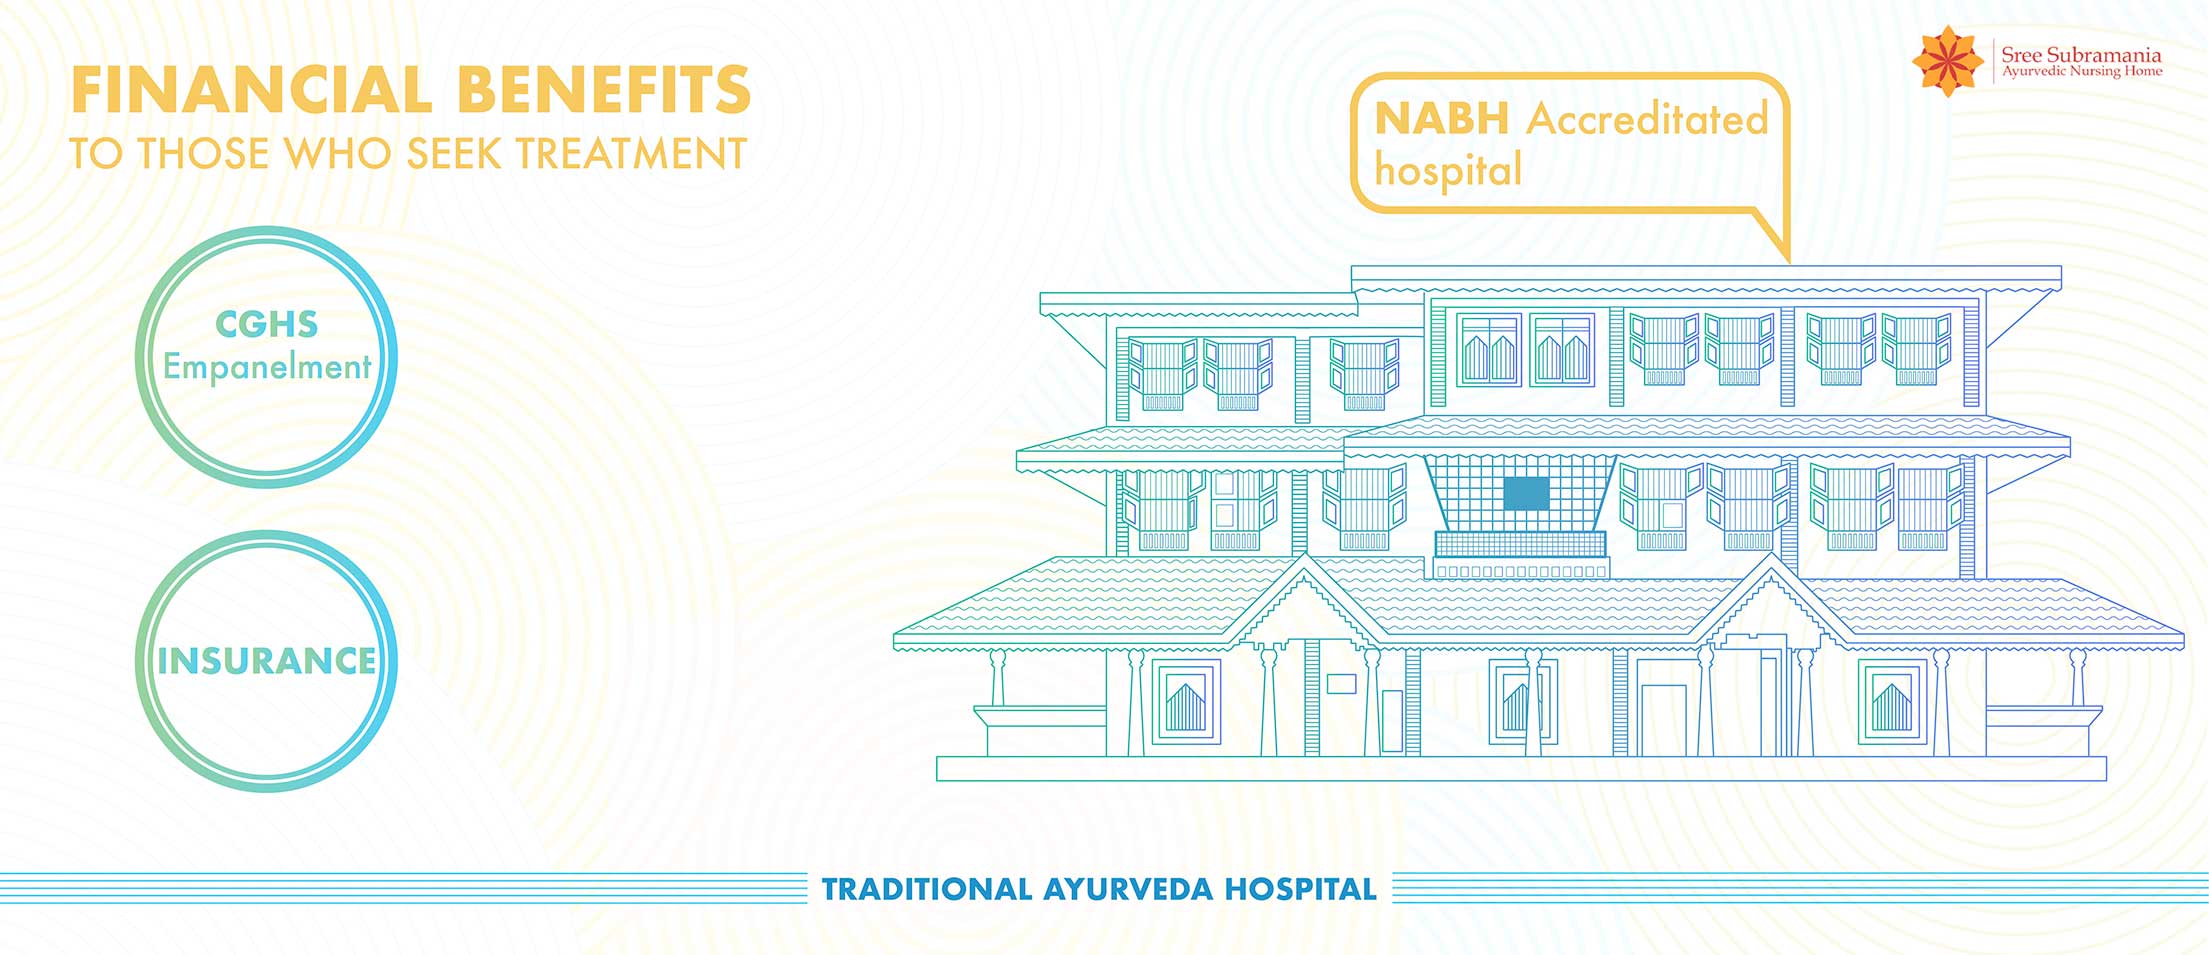 Few financial benefits for patients availing ayurvedic treatment at Sree Subramania ayurvedic nursing home